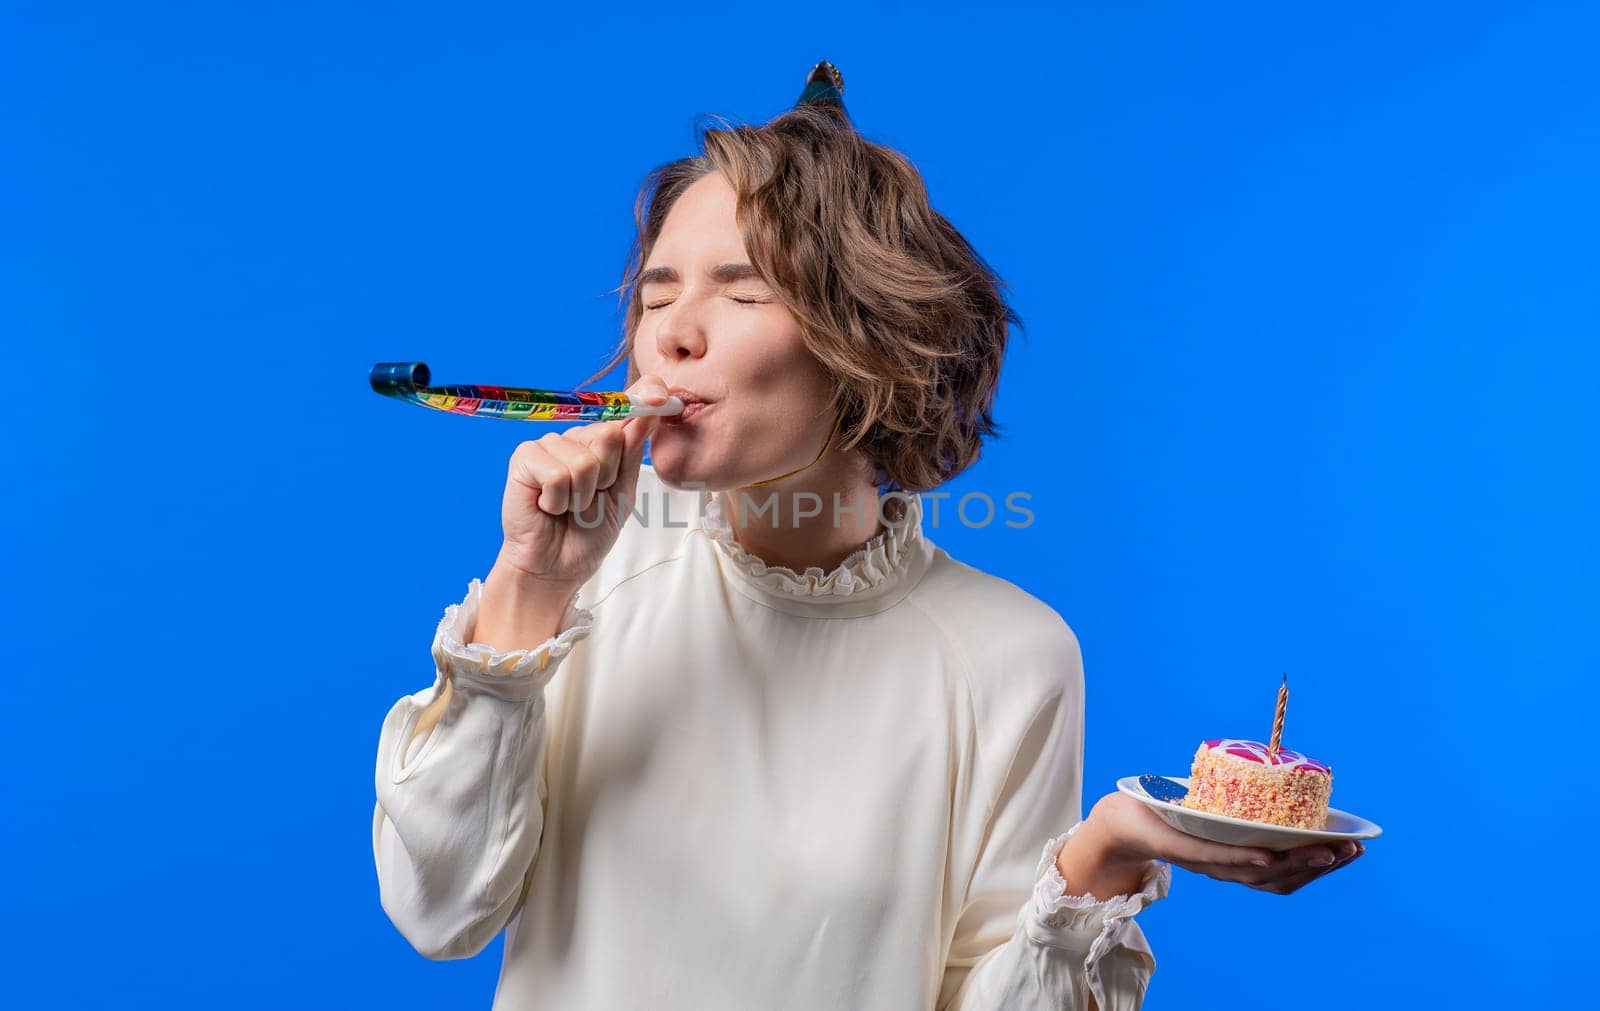 Happy birthday woman making wish - candle on cake. Girl smiling, celebrating. by kristina_kokhanova